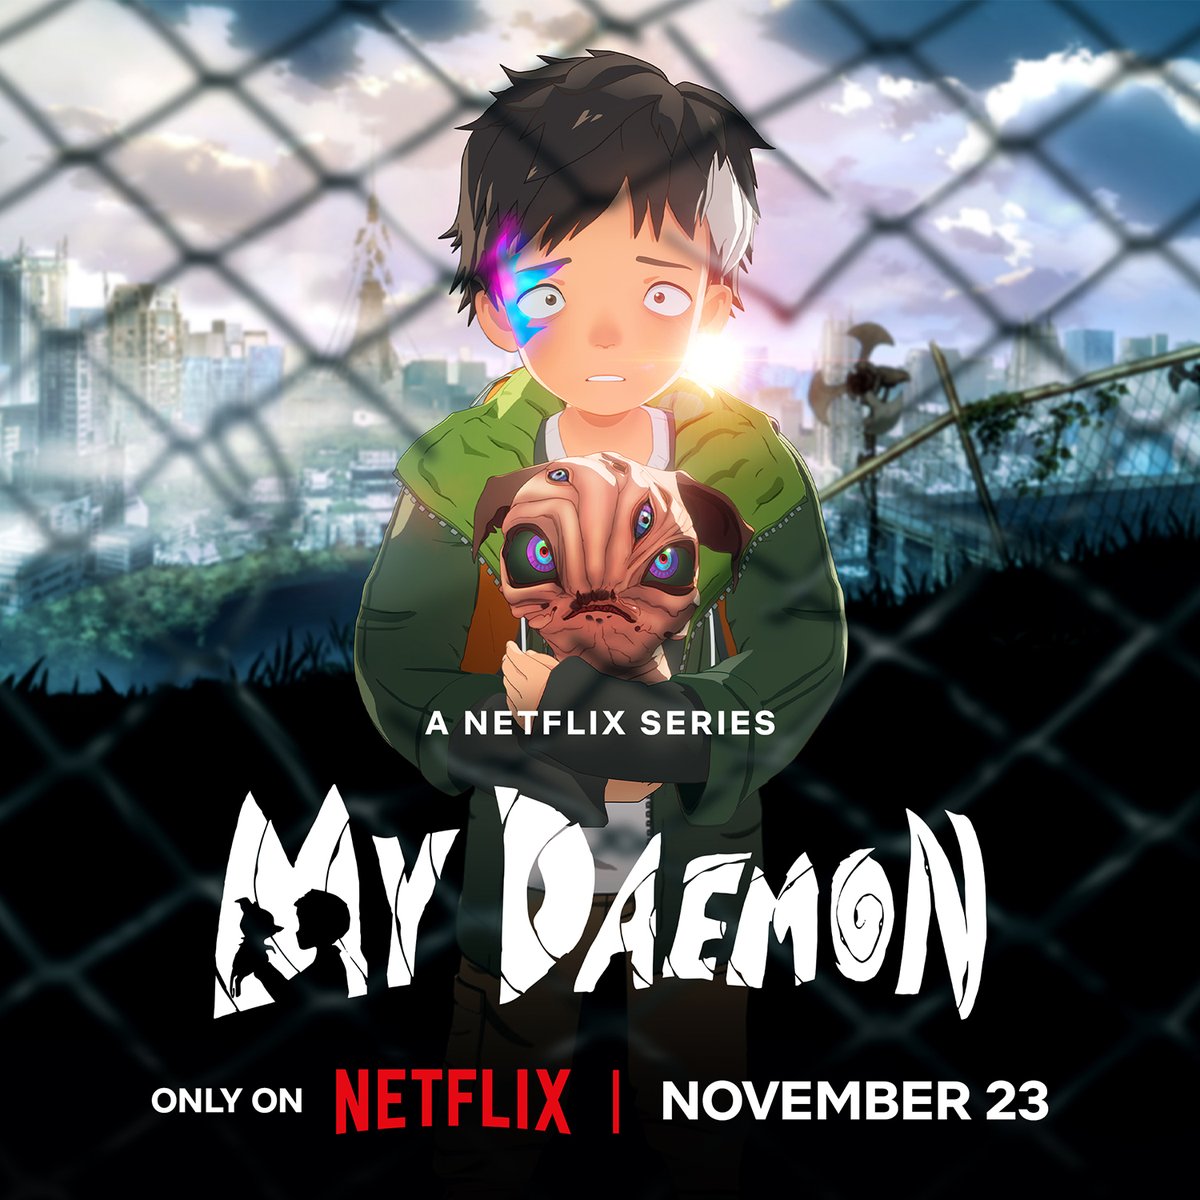 Netflix Anime on X: Announcing production of the Netflix anime series  #MyDeamon 🎉 Written by Hirotaka Adachi aka Otsuichi, it follows the  adventures of Kento and Anna #TUDUM #TUDUMJapan @igloocgofficial  @adachihirotaka  /